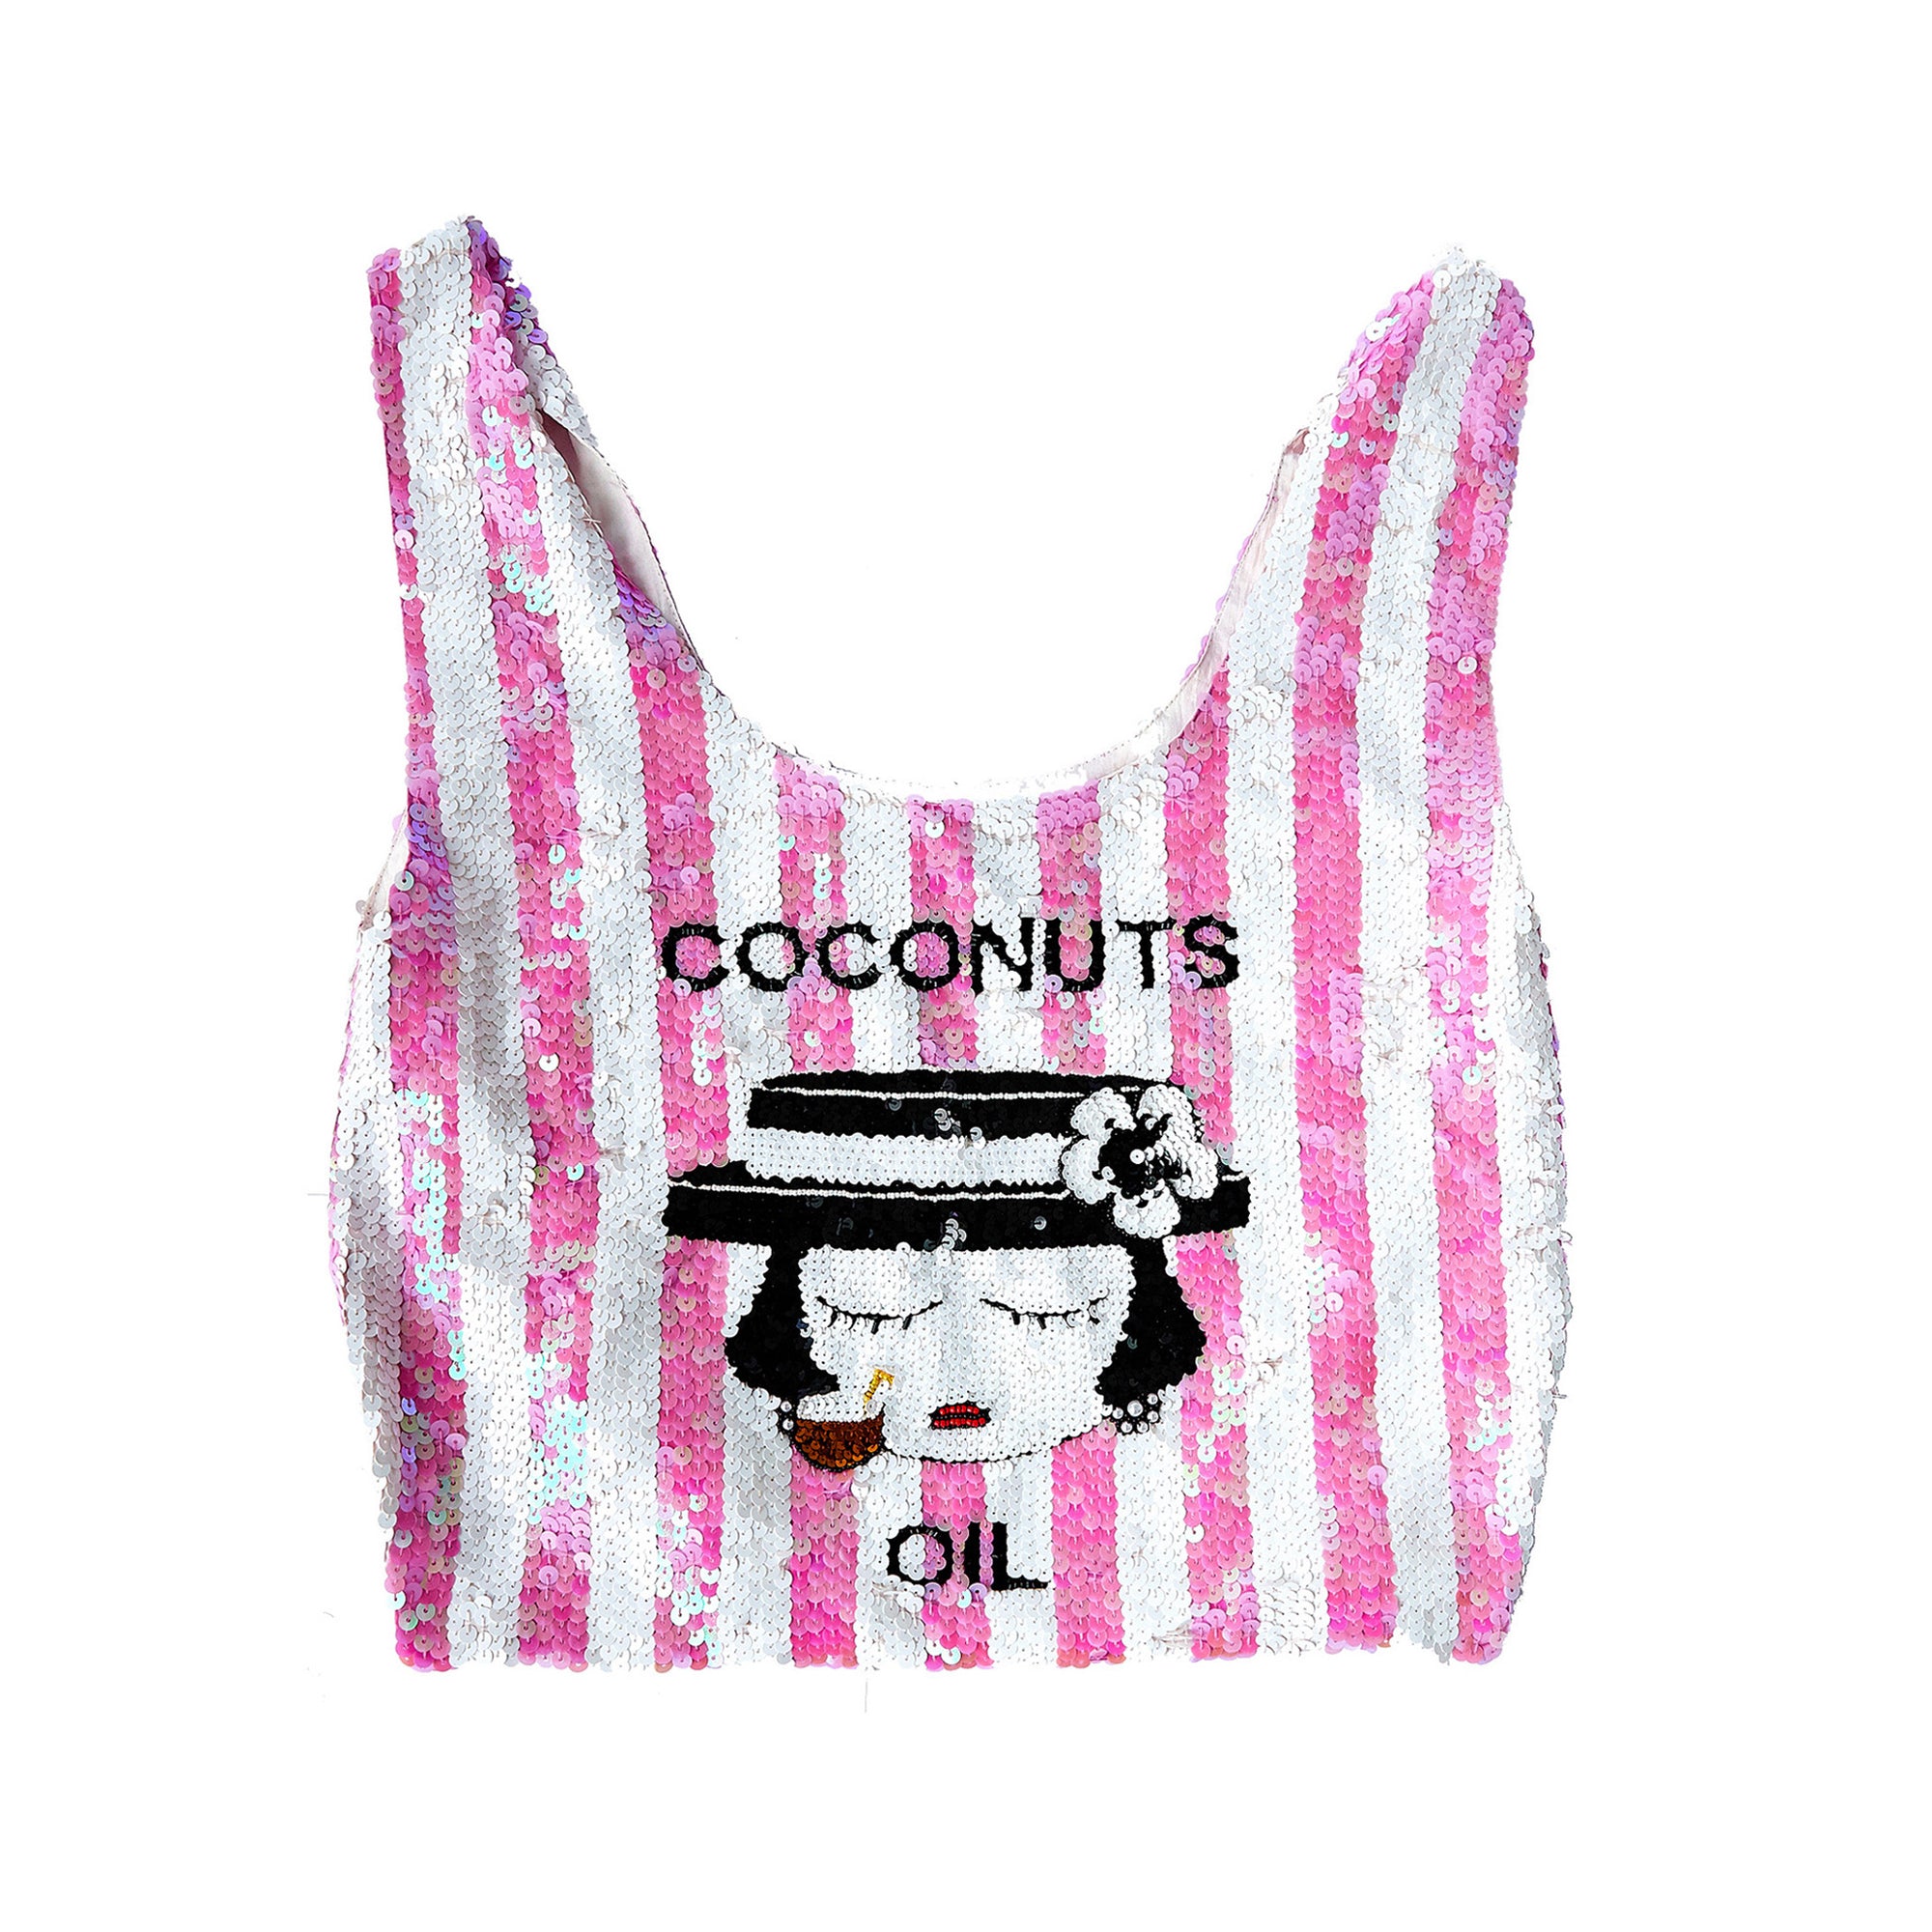 Sequin Supermarket Bag " Coconuts Oil " - Pre Order